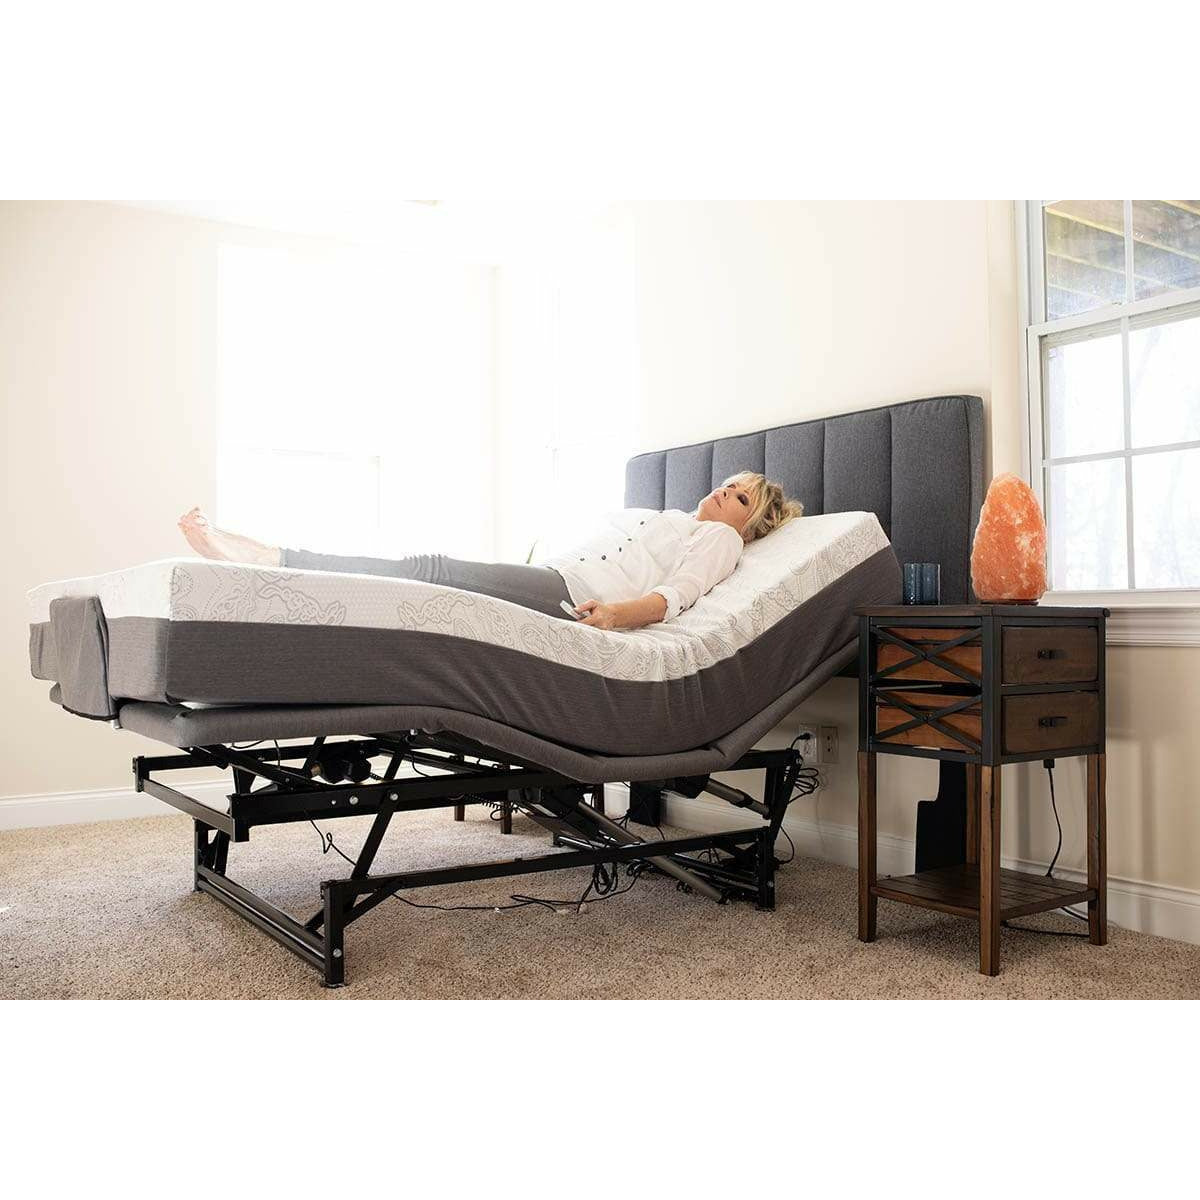 FLEXABED Hi-Low SL Adjustable Bed –